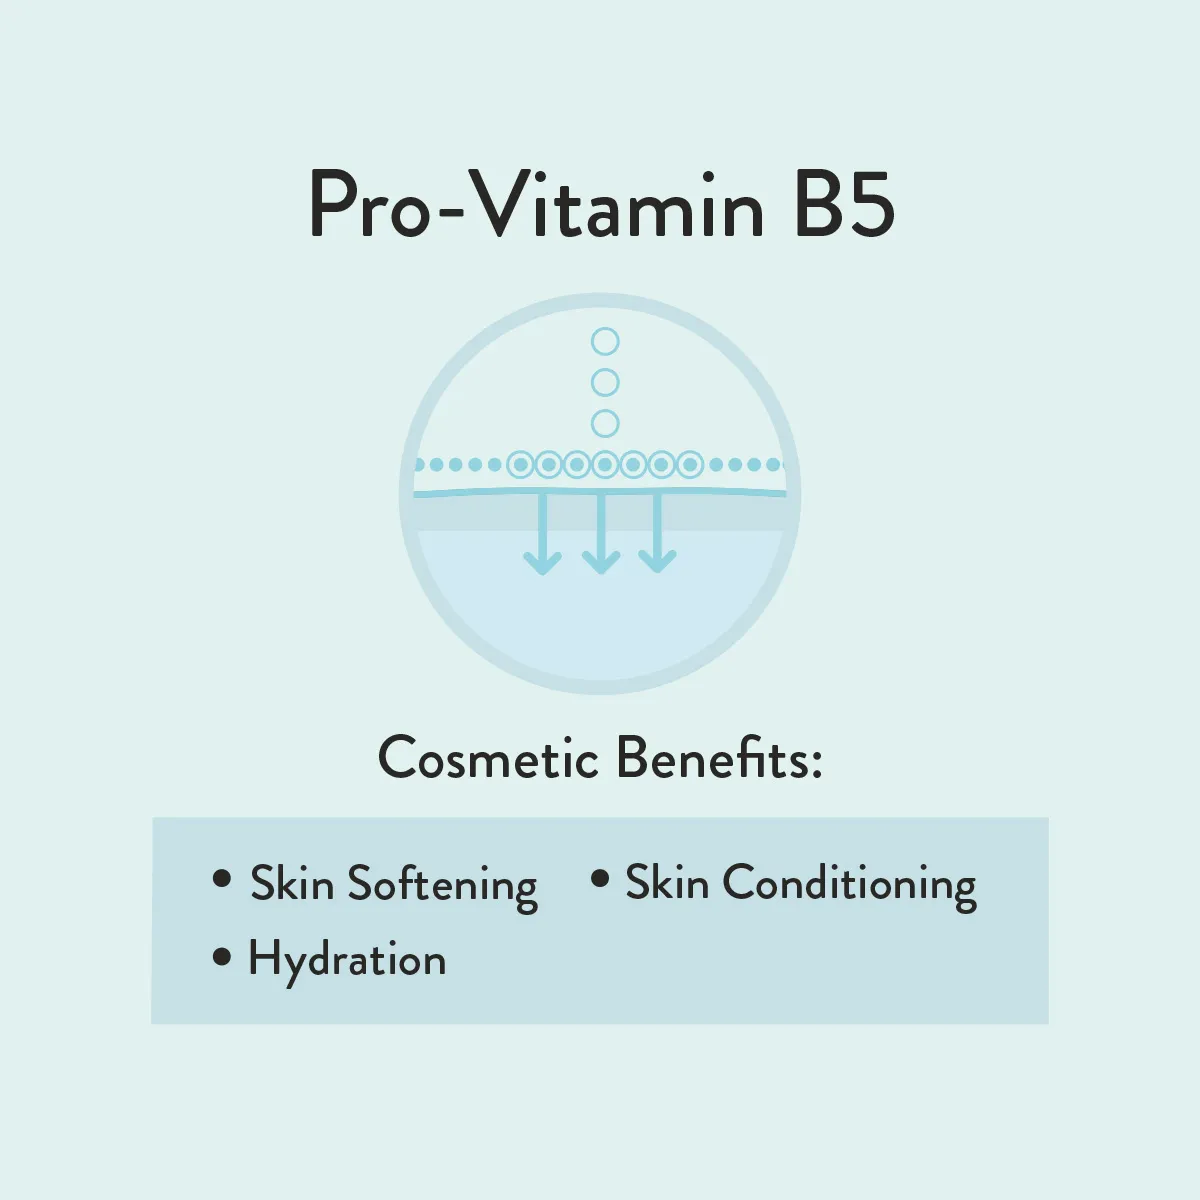 Pro-Vitamin B5 cosmetic benefits